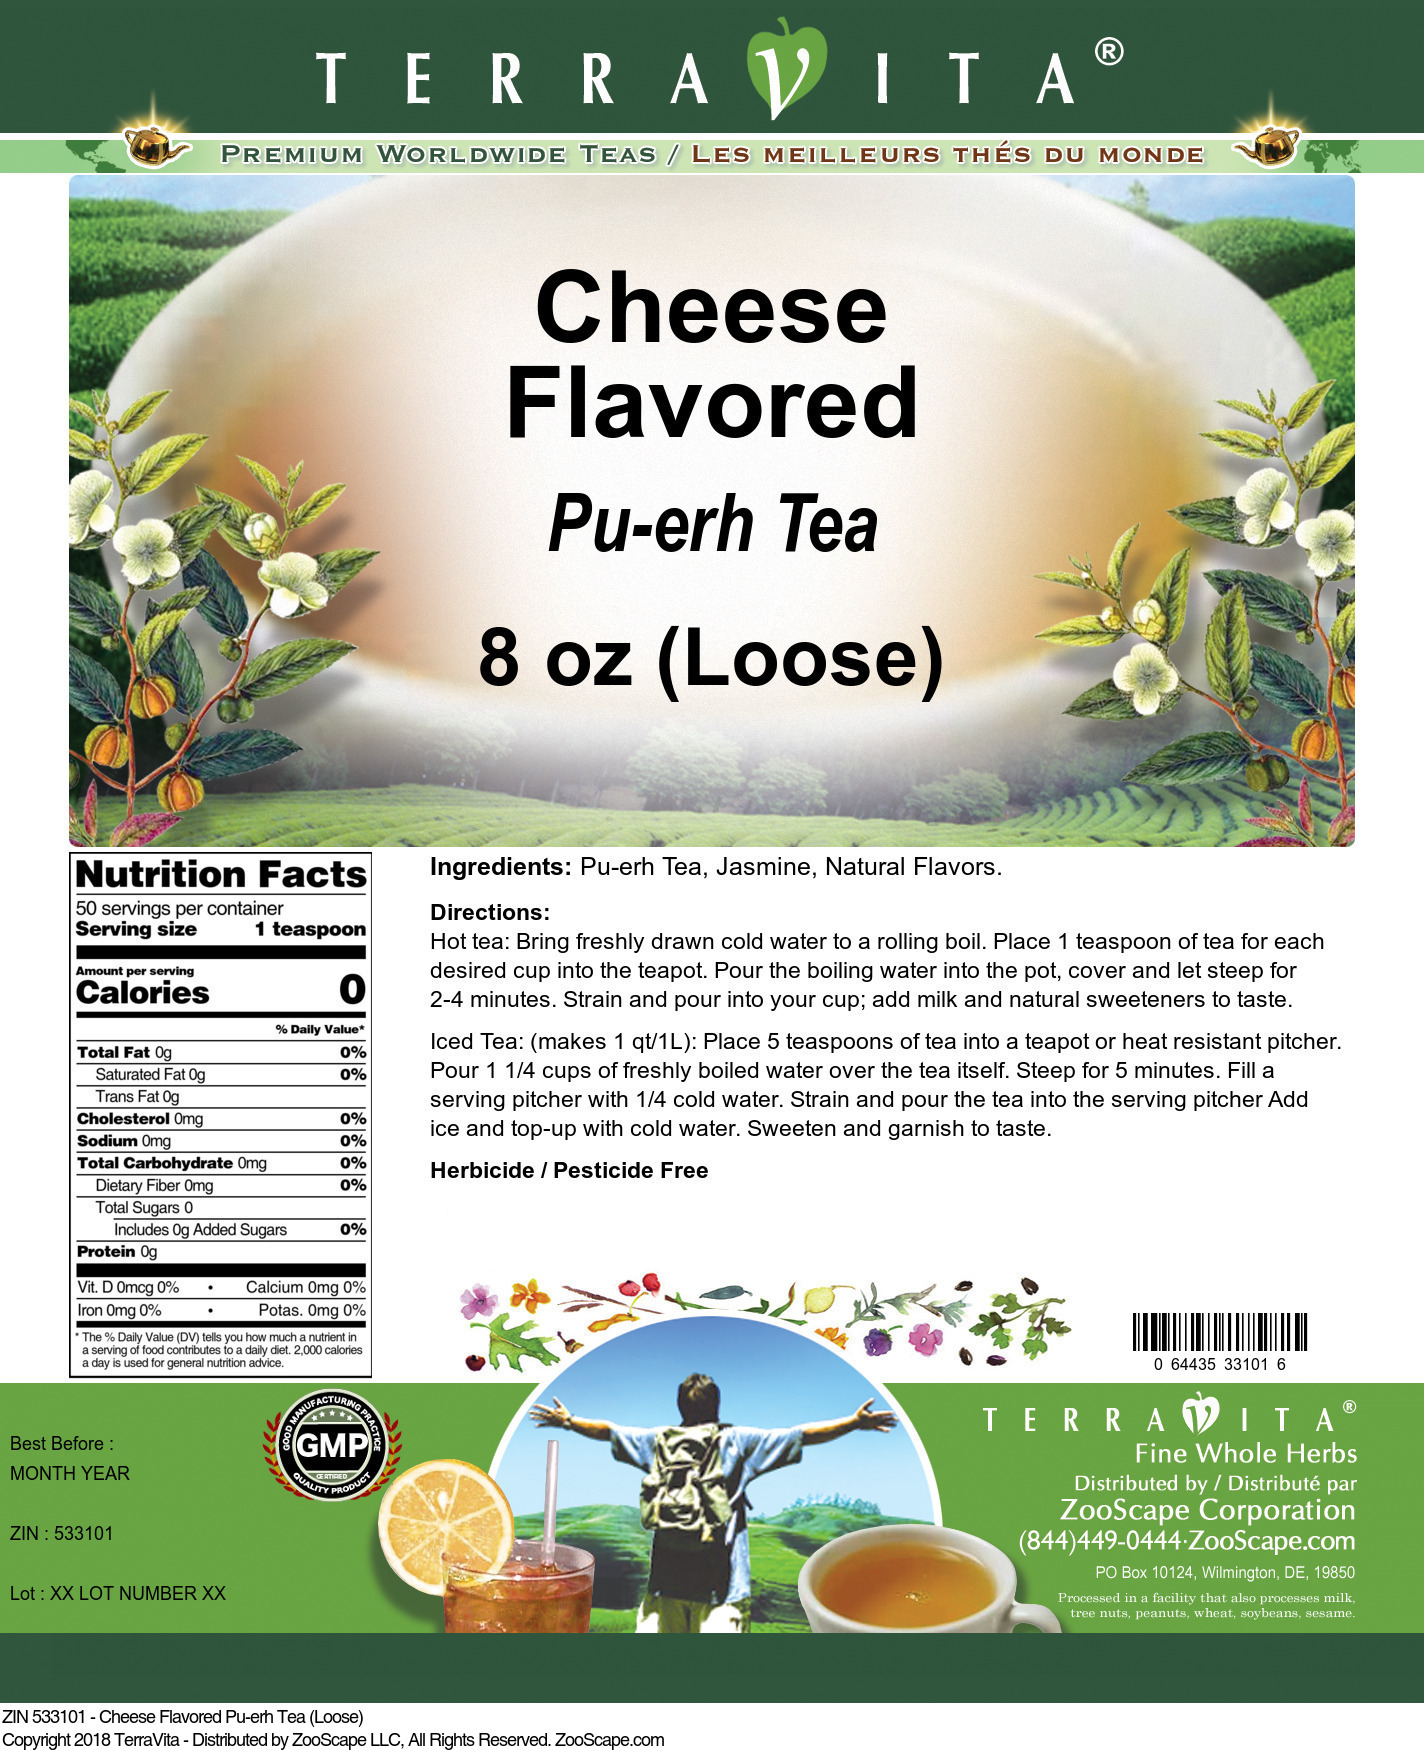 Cheese Flavored Pu-erh Tea (Loose) - Label